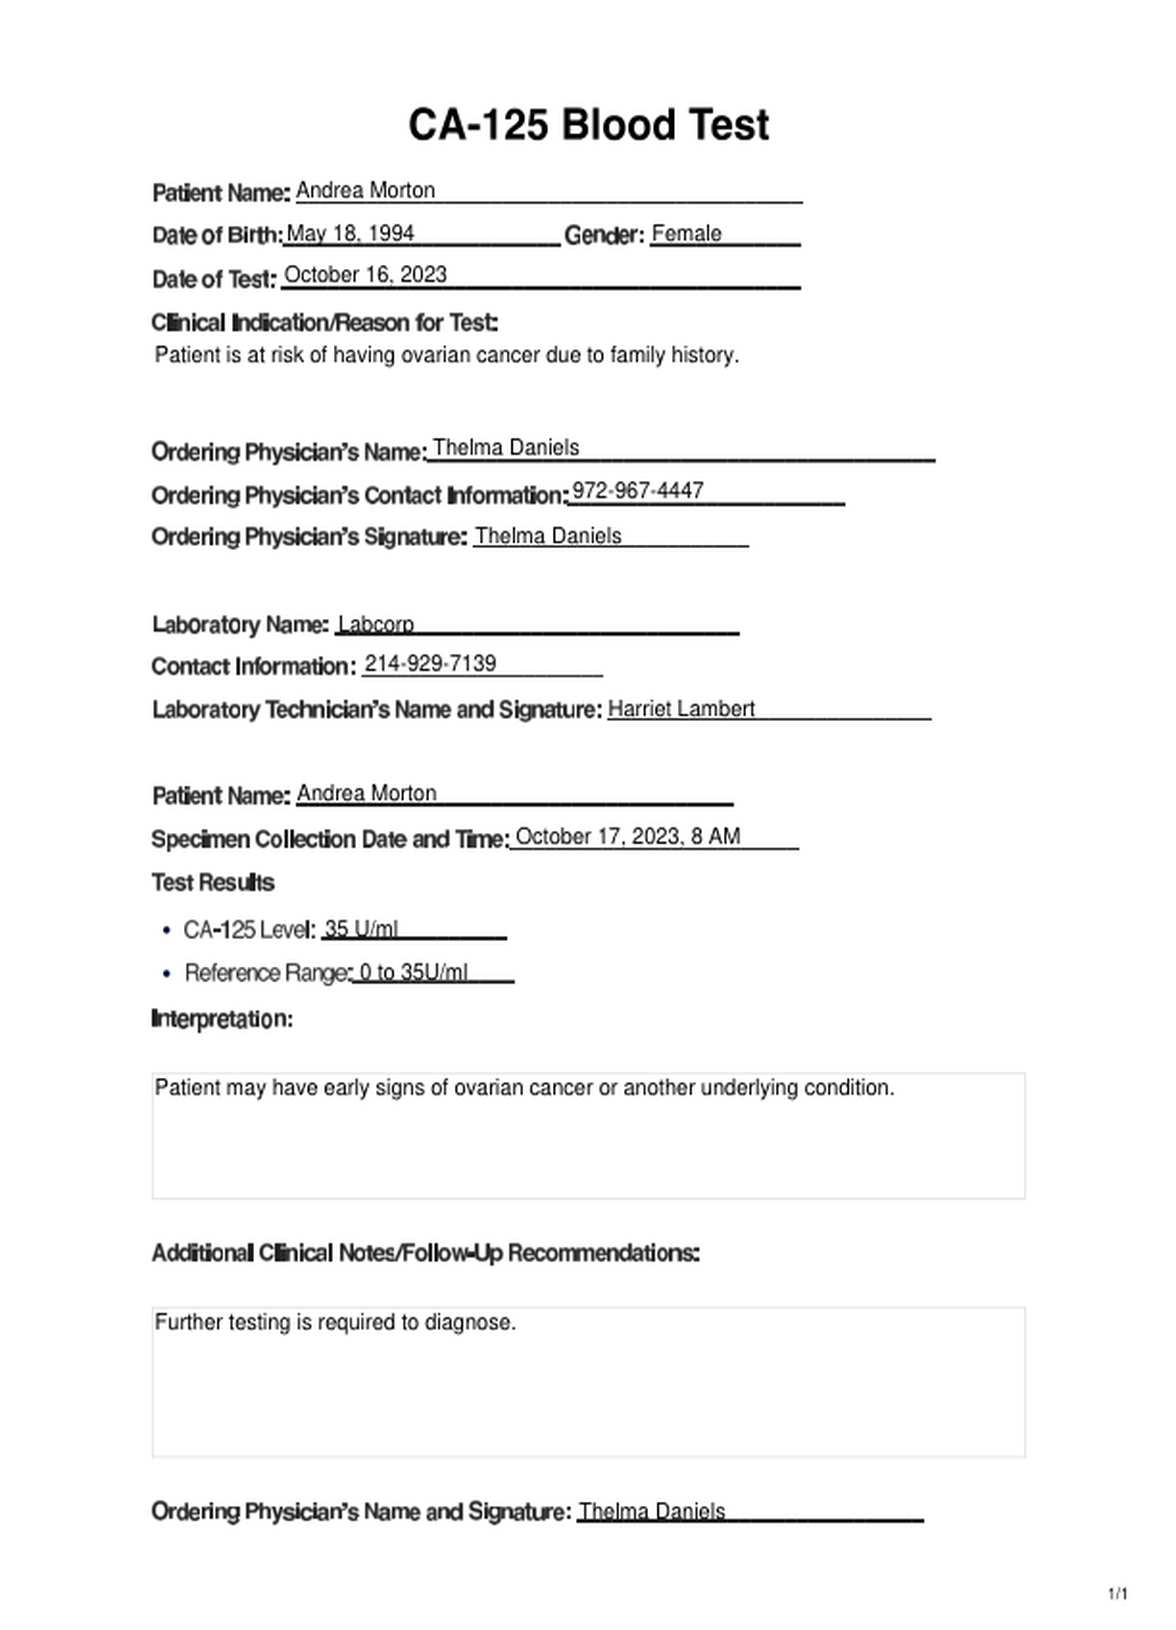 CA-125 Blood Test PDF Example